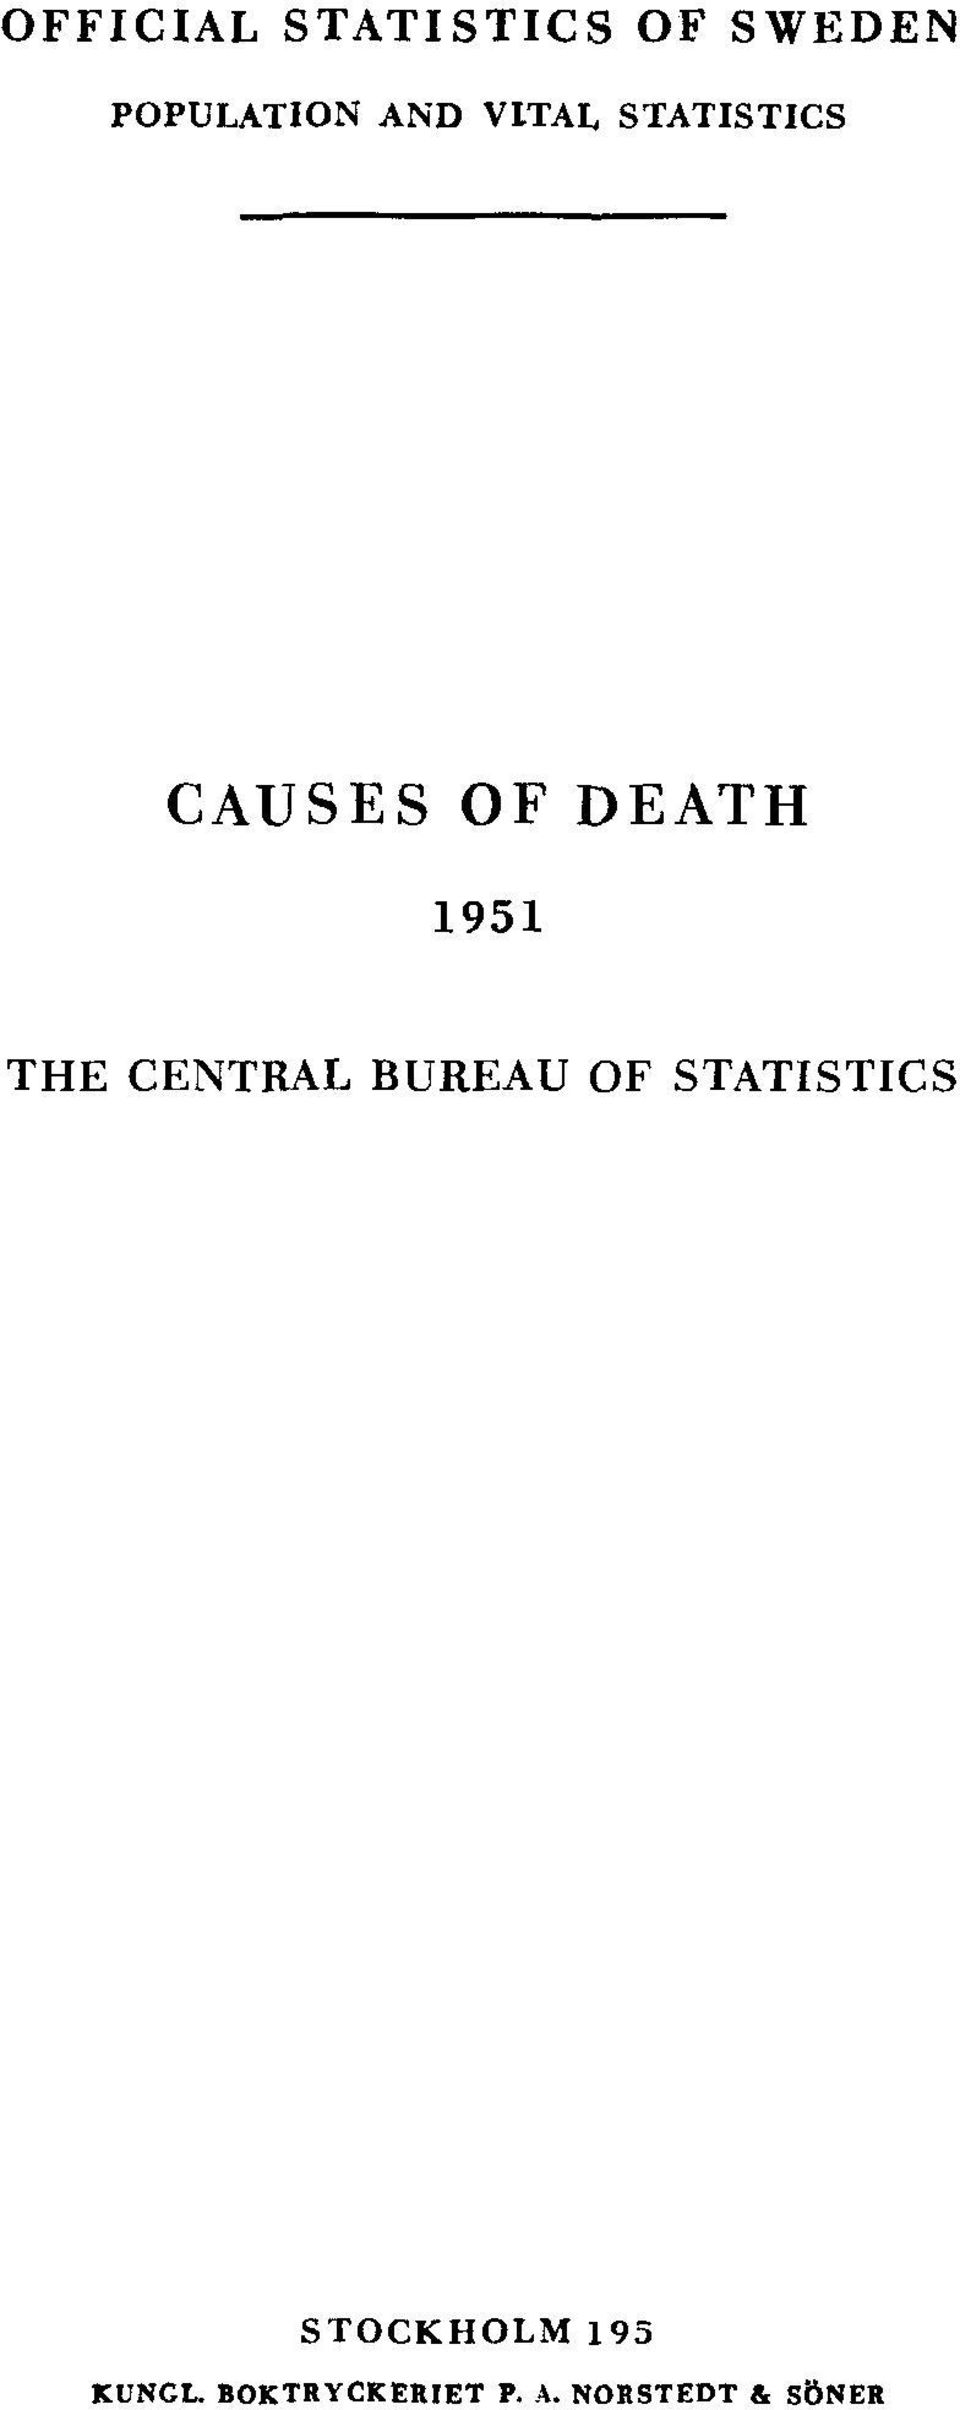 THE CENTRAL BUREAU OF STATISTICS STOCKHOLM